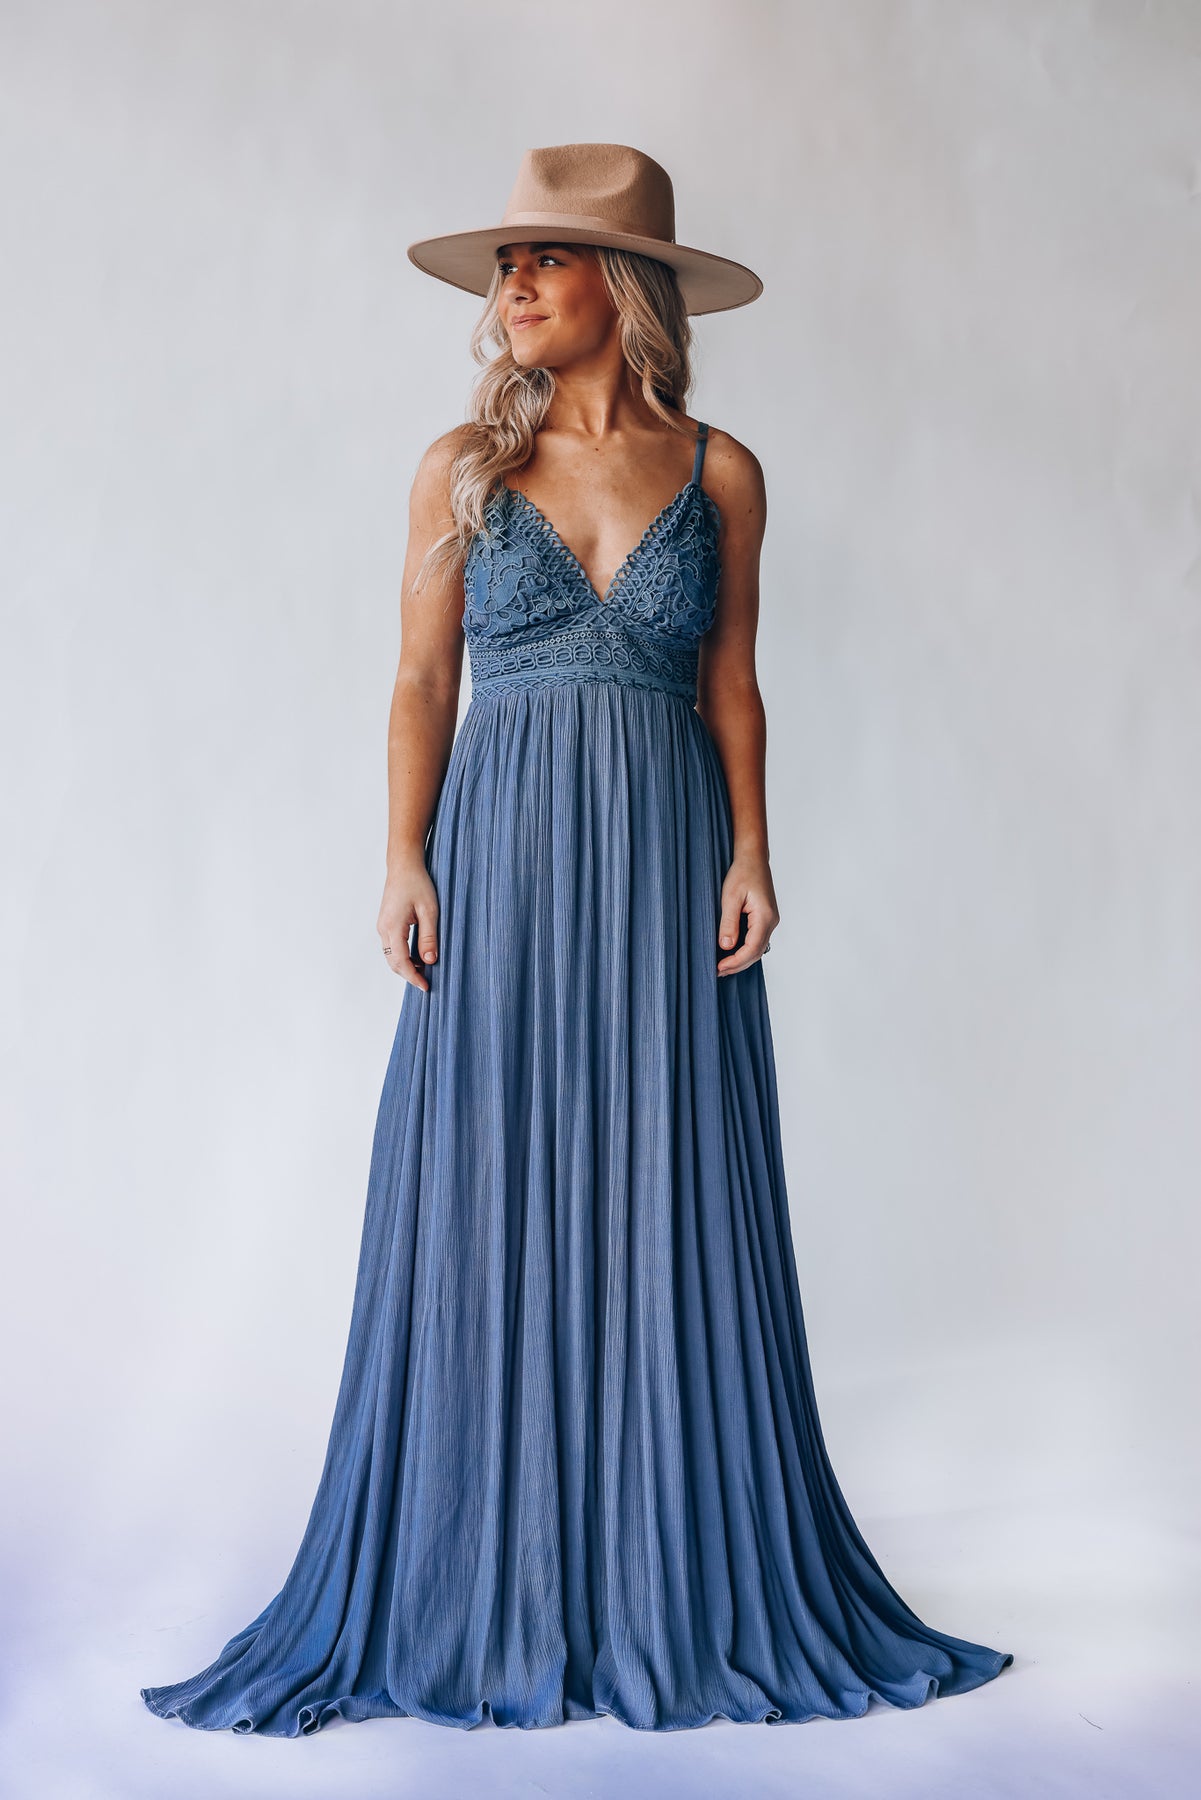 Wanderlust Maxi (Denim Southern Dress Alternative – Blue)